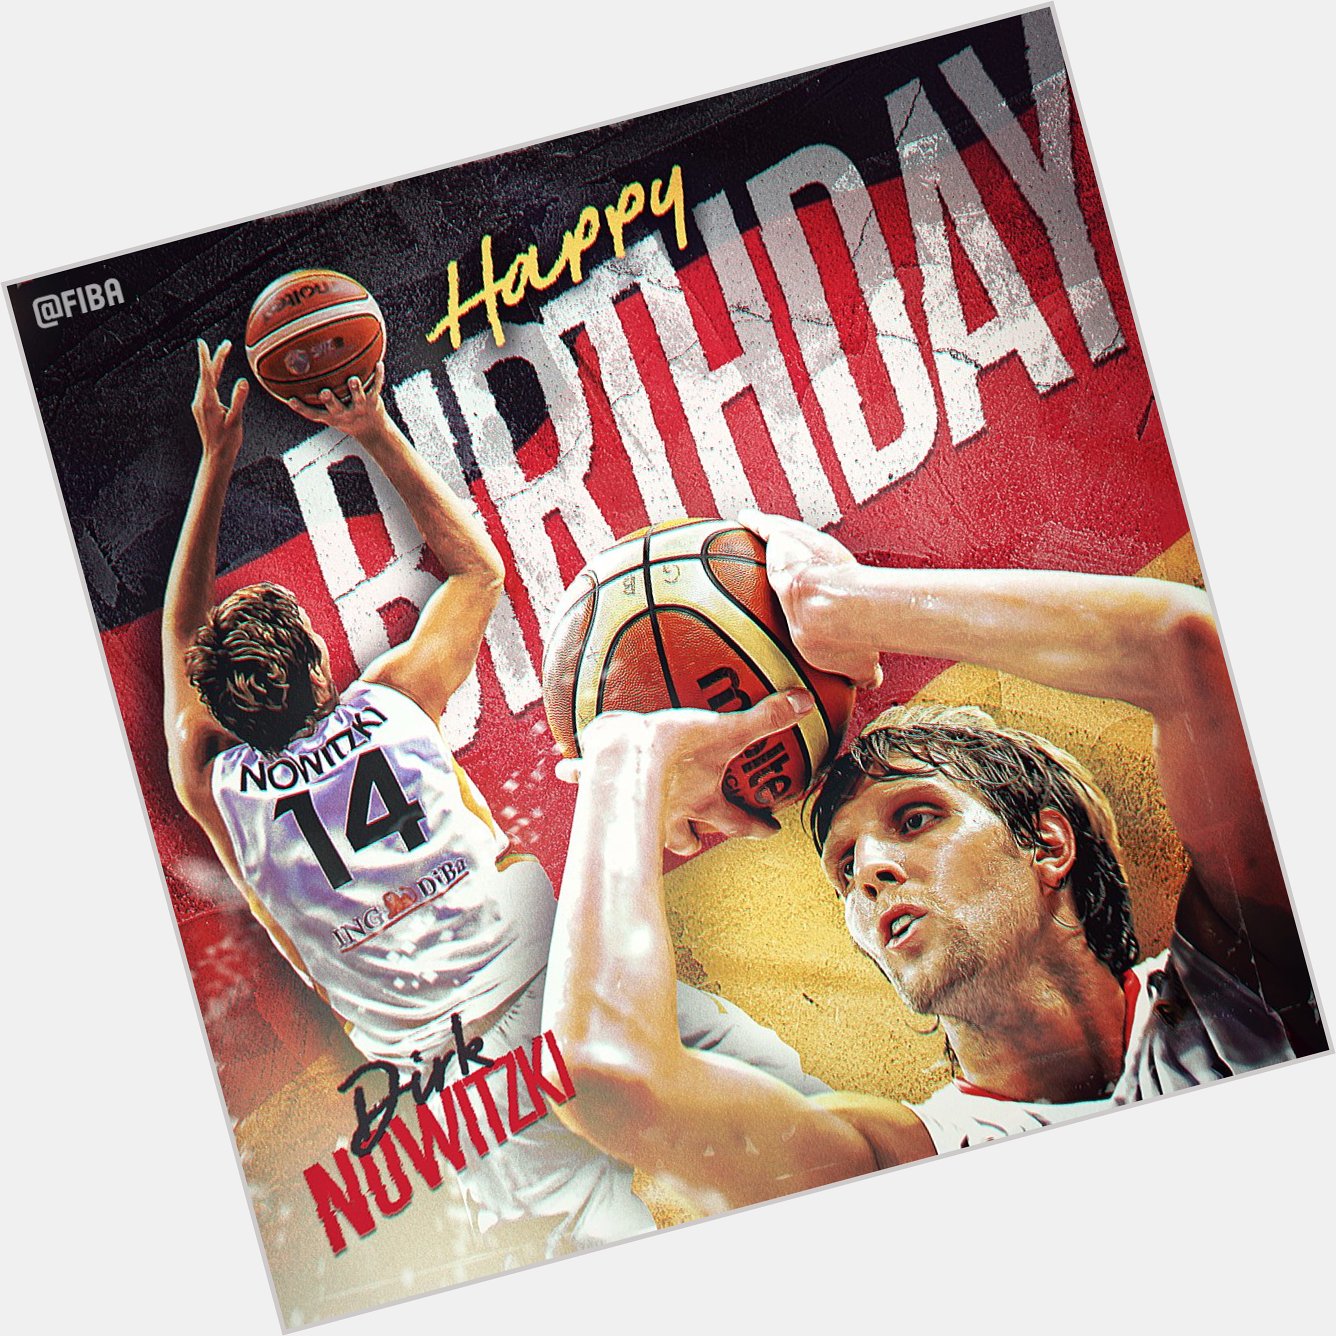    Join us in wishing 2002 Dirk Nowitzki ( a Happy Birthday ! 